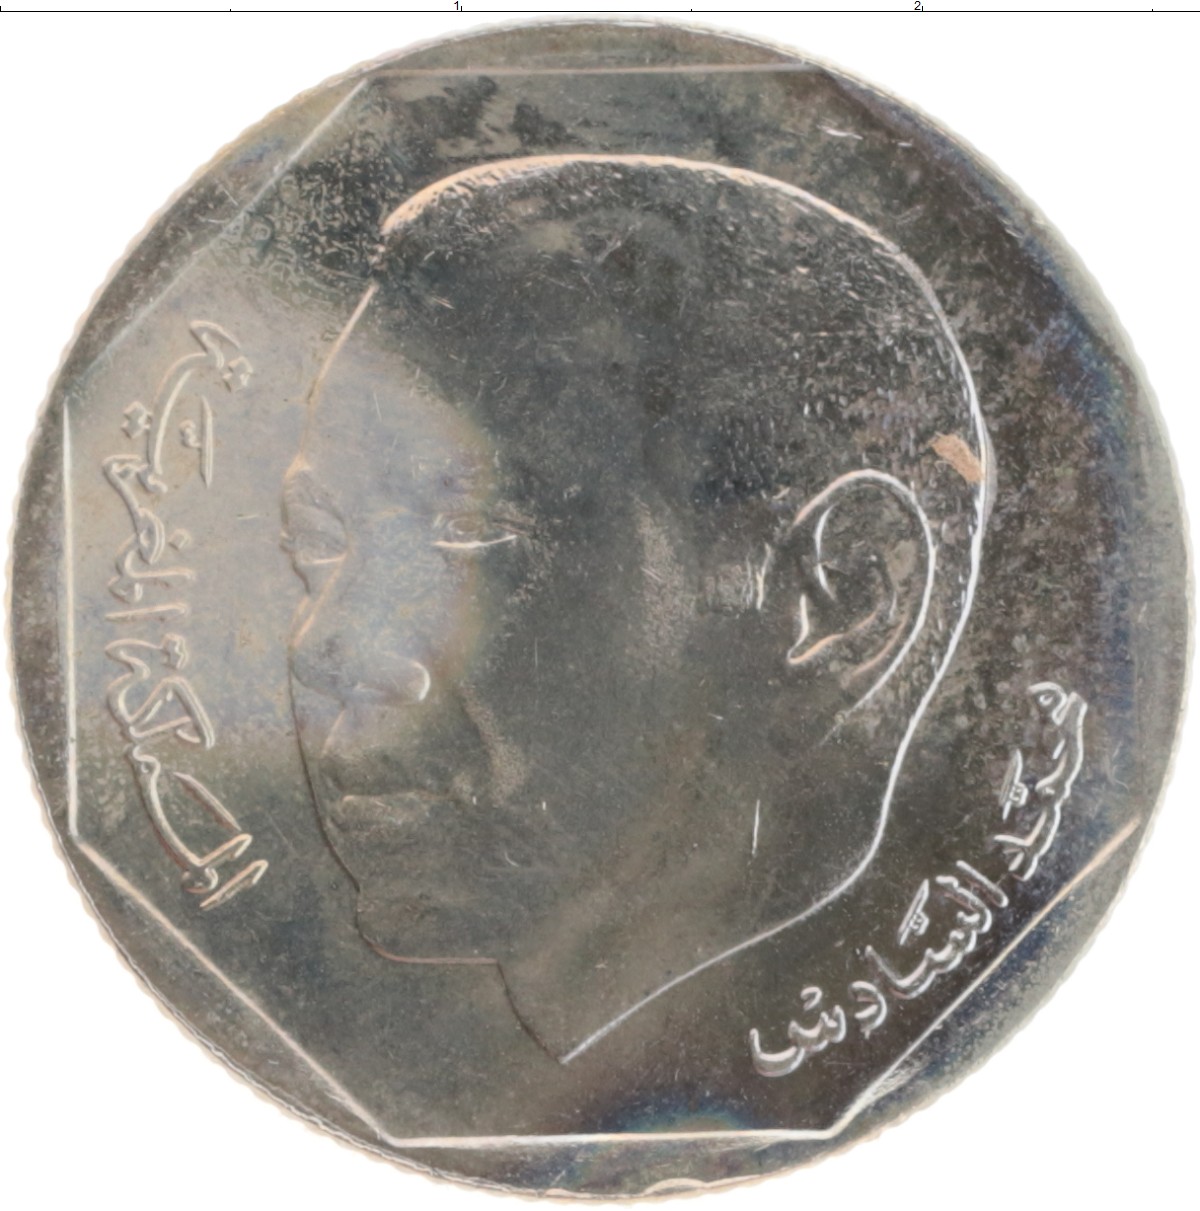 2 дирхама. 1/2 Дирхама 2002 Марокко. Монета Марокко 2002. Монета Марокко 1/2 дирхама 2002. 2 Дирхама монета.